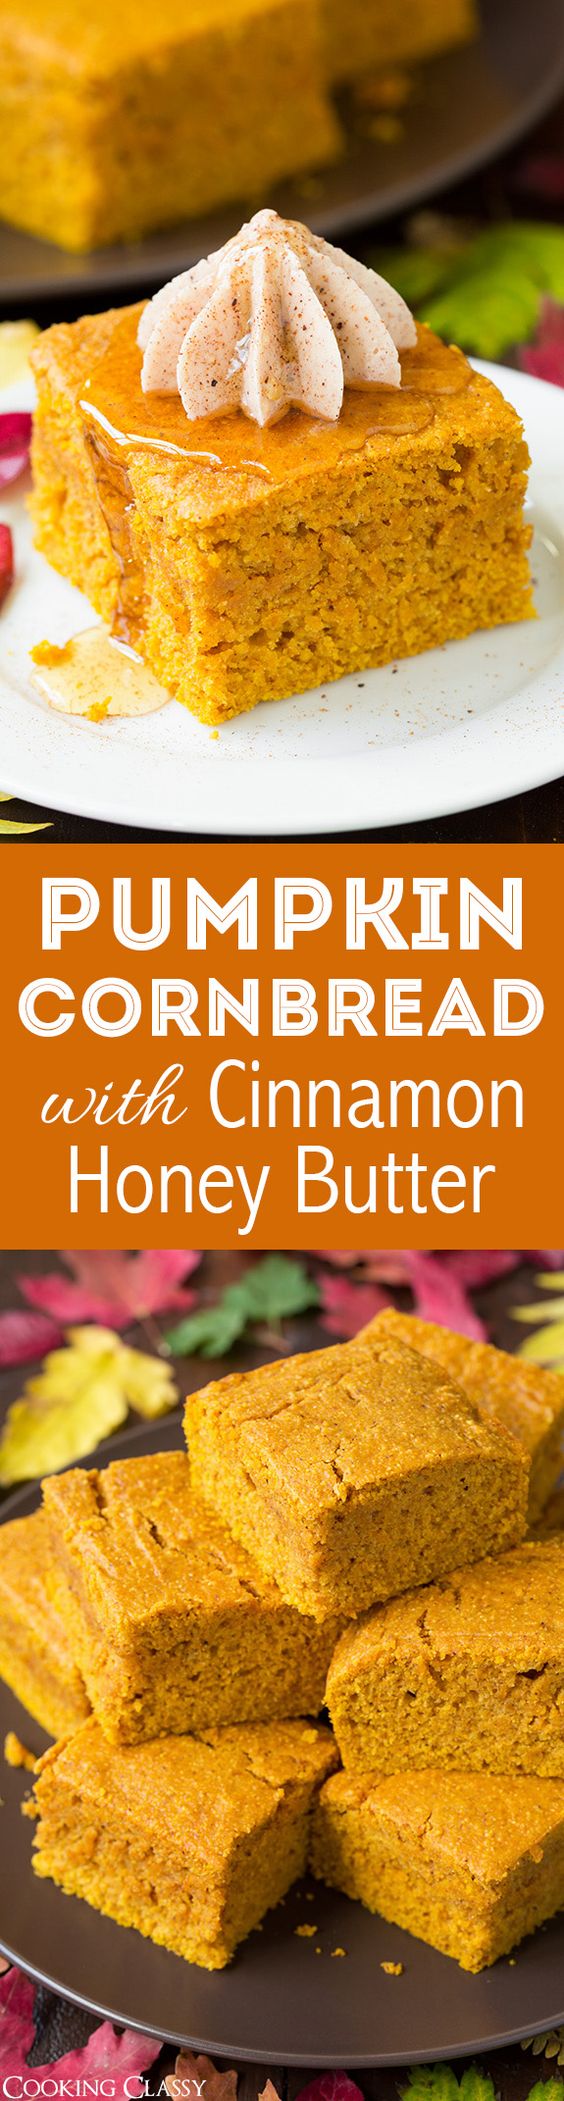 Pumpkin Cornbread with Cinnamon Honey Butter